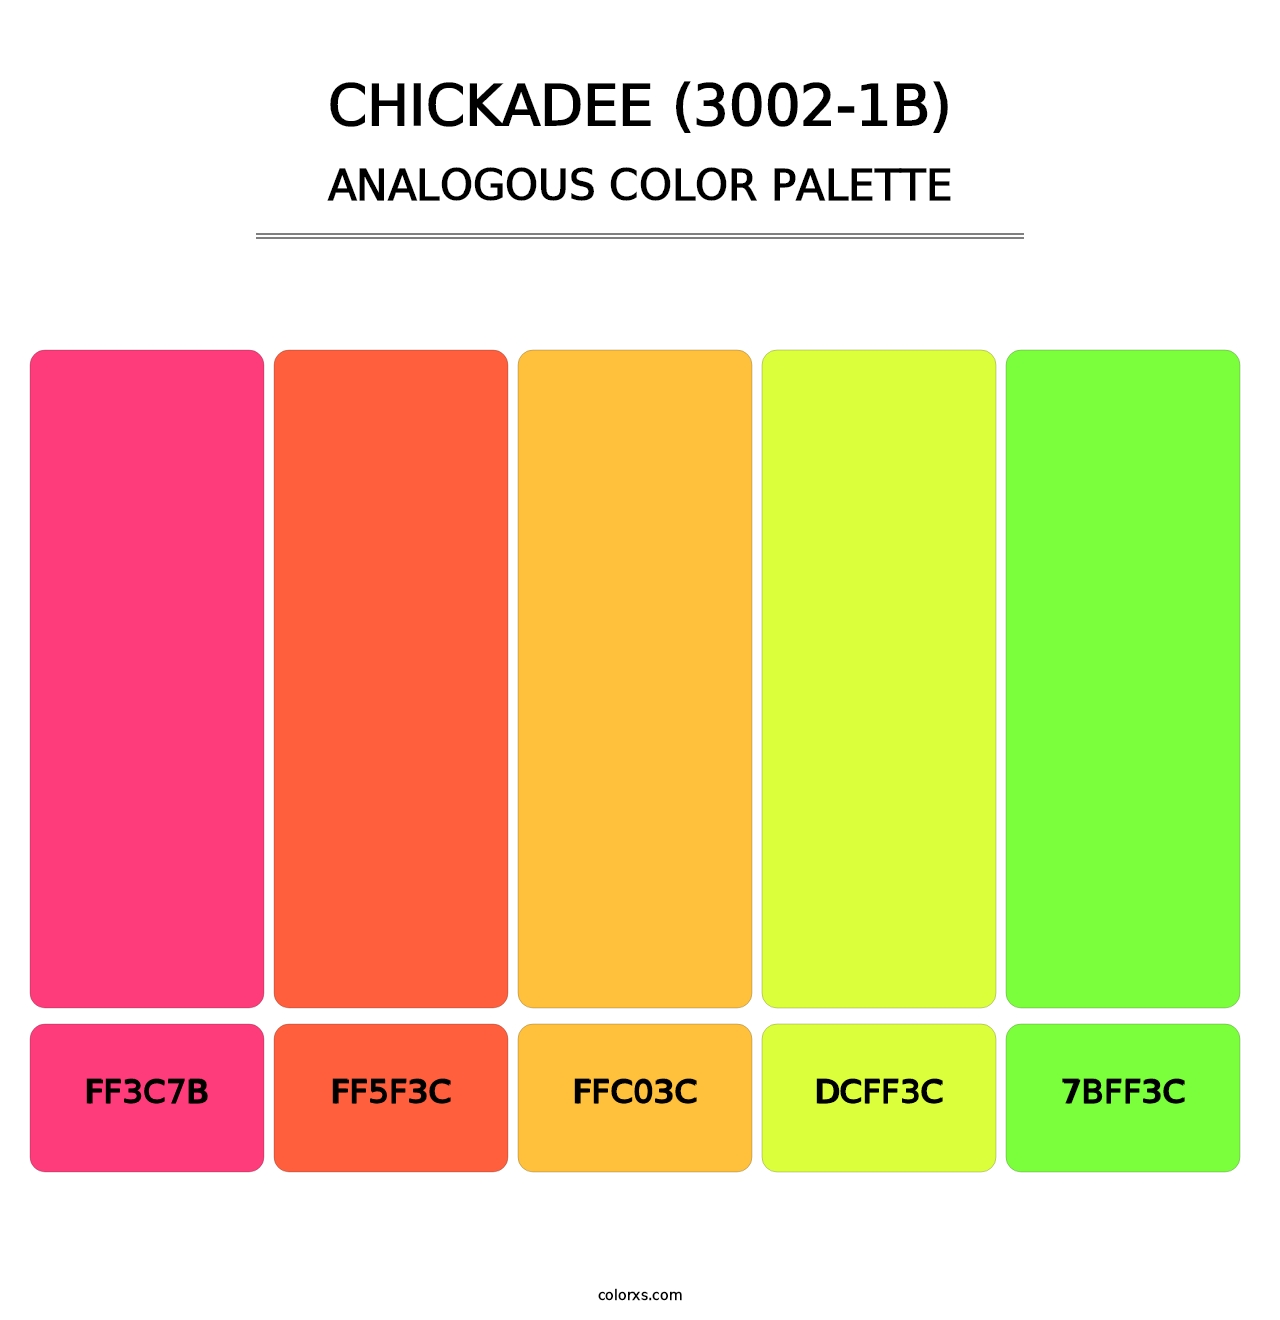 Chickadee (3002-1B) - Analogous Color Palette